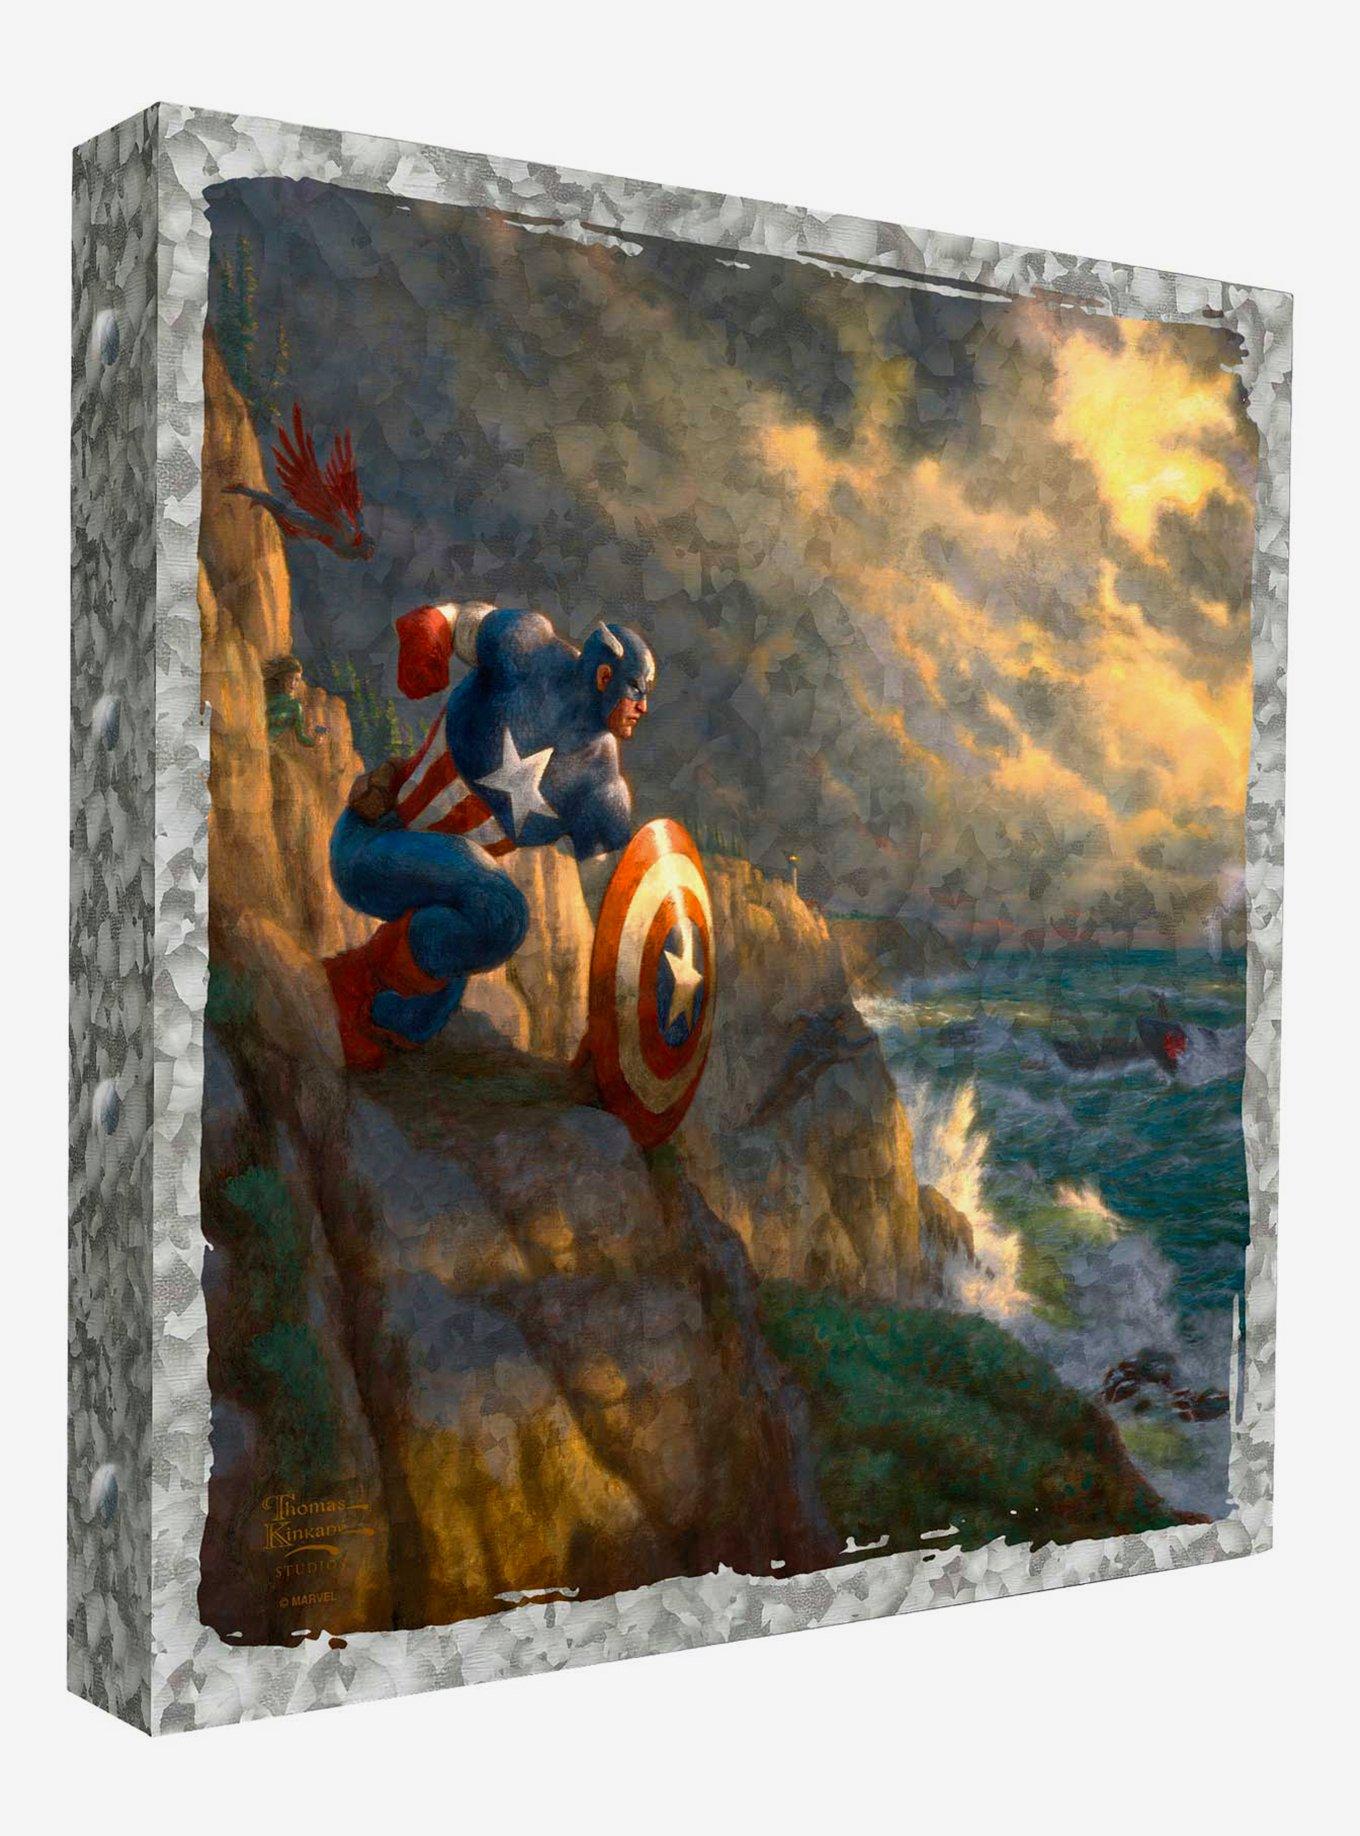 Marvel Captain America Sentinel of Liberty 14" x 14" Metal Box Art